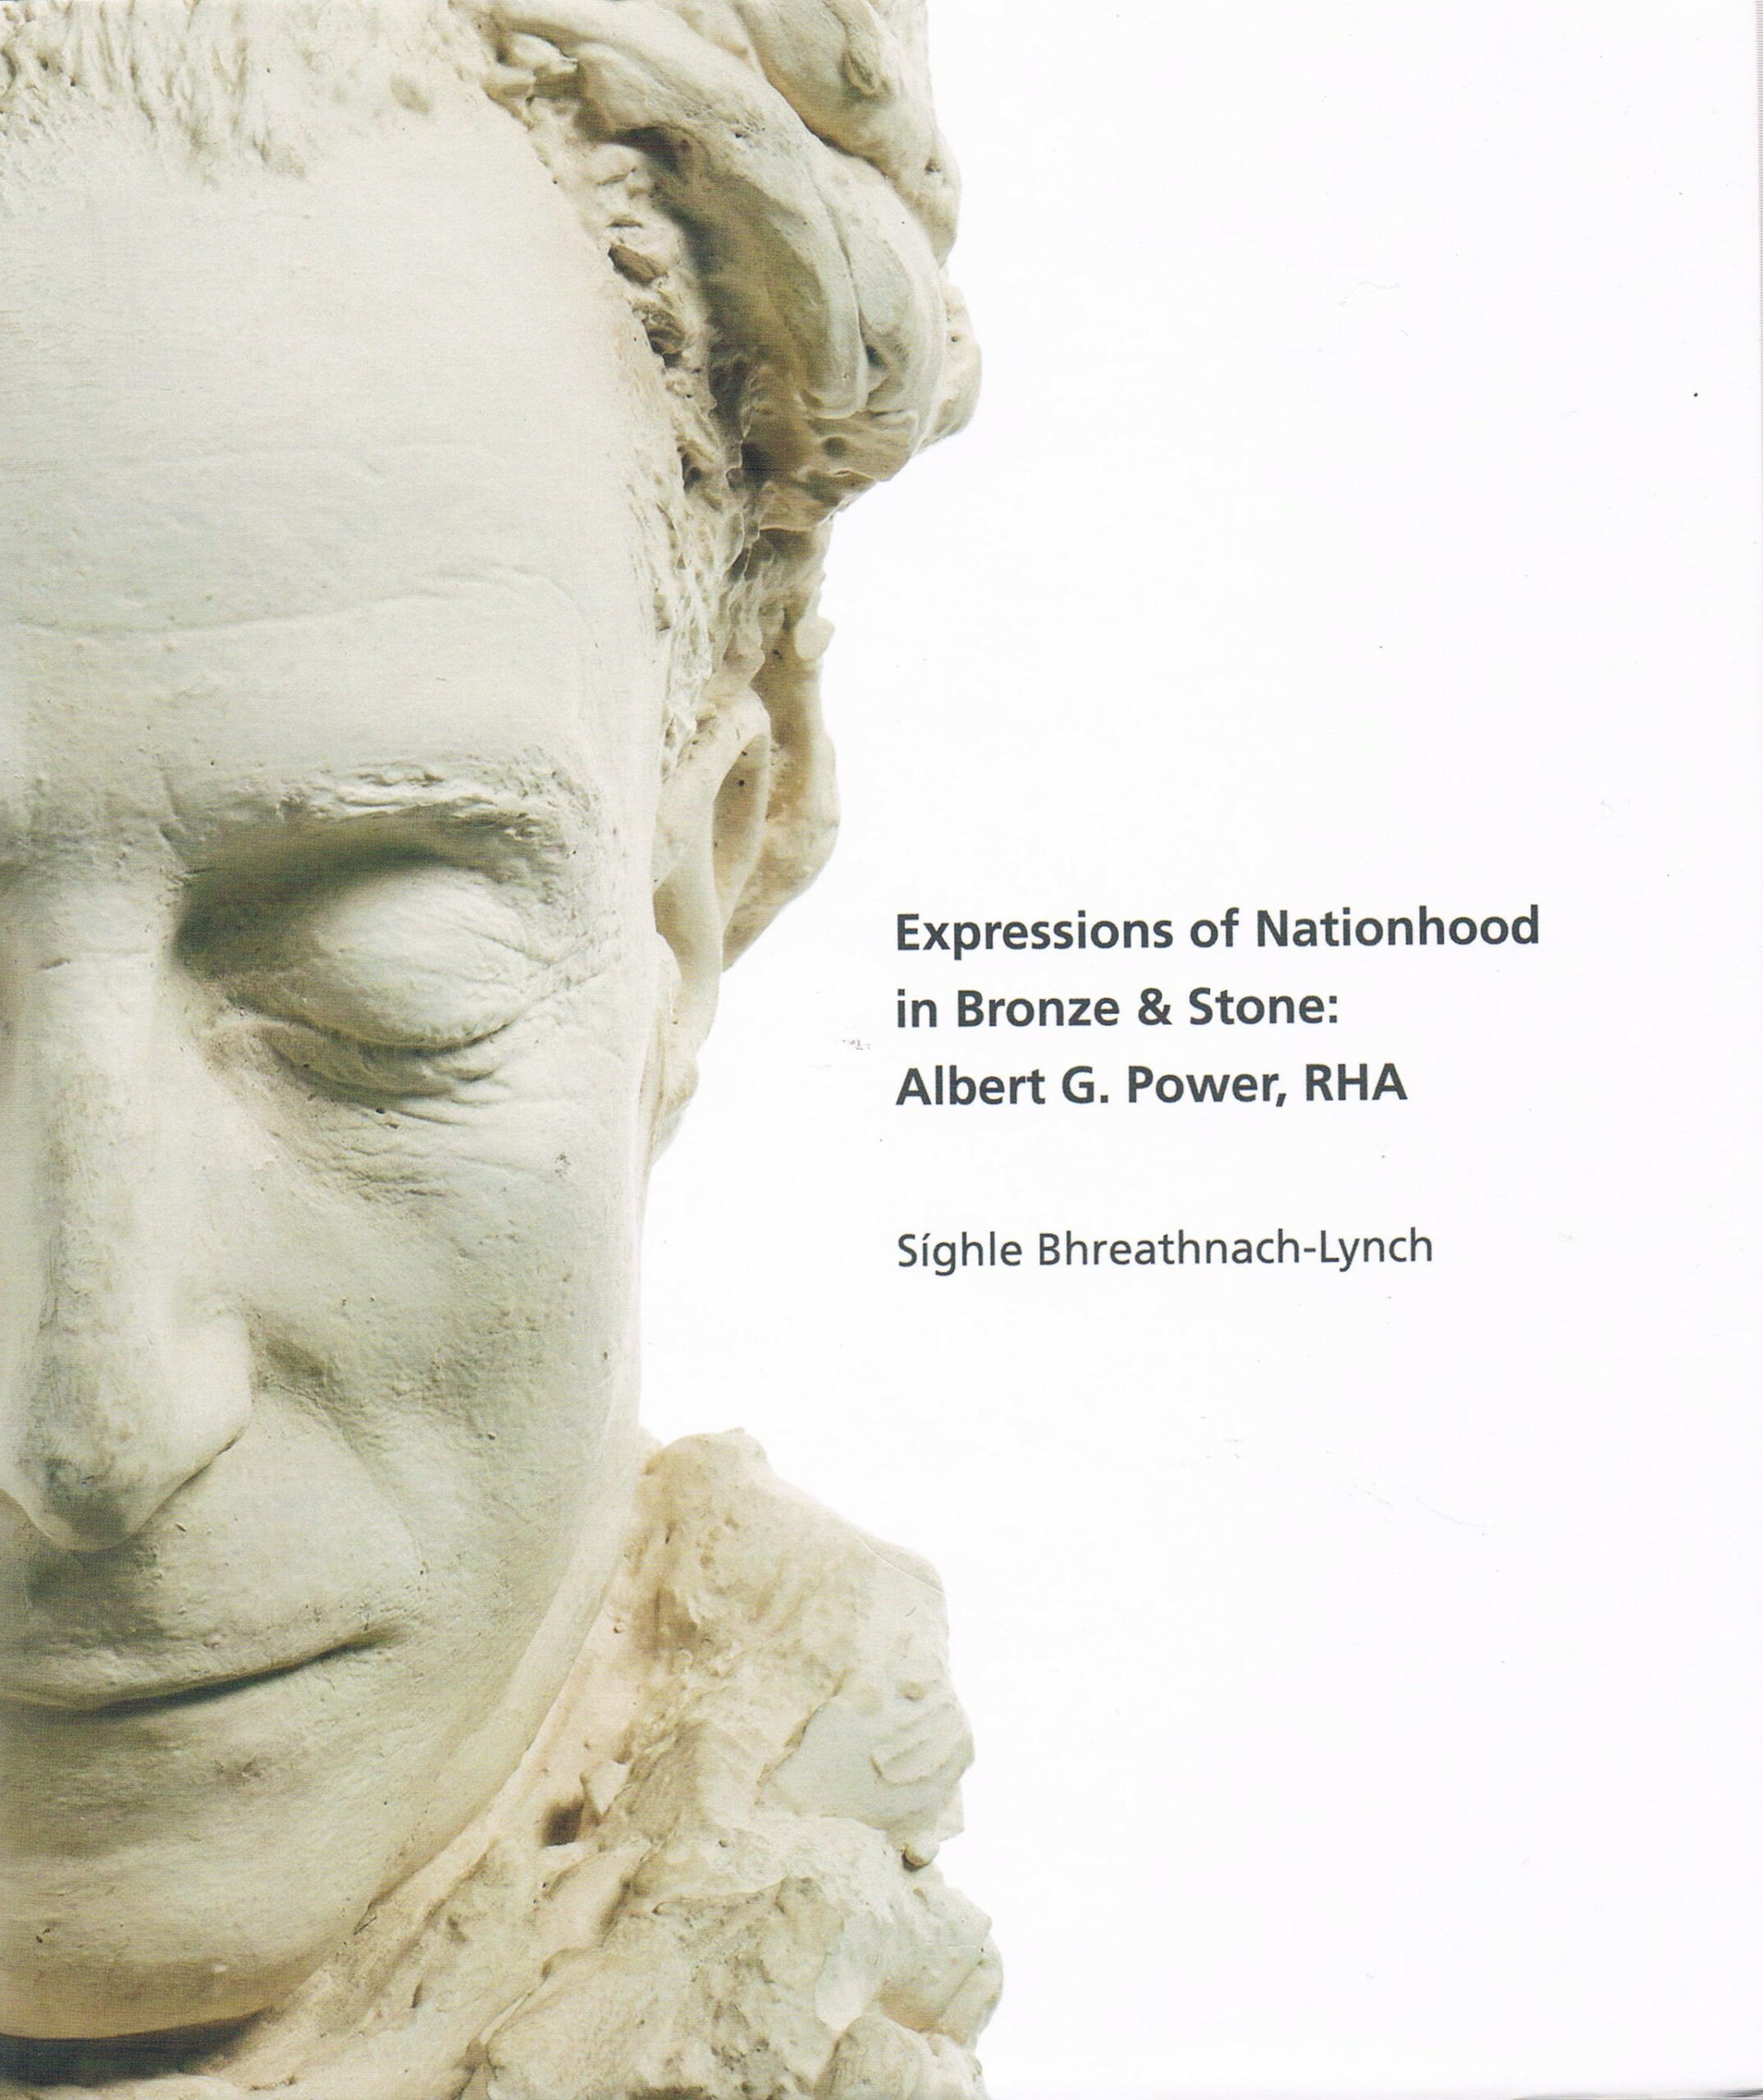 Expressions of Nationhood in Bronze & Stone: Albert G. Power, RHA | Sigle Bhreathnach-Lynch | Charlie Byrne's